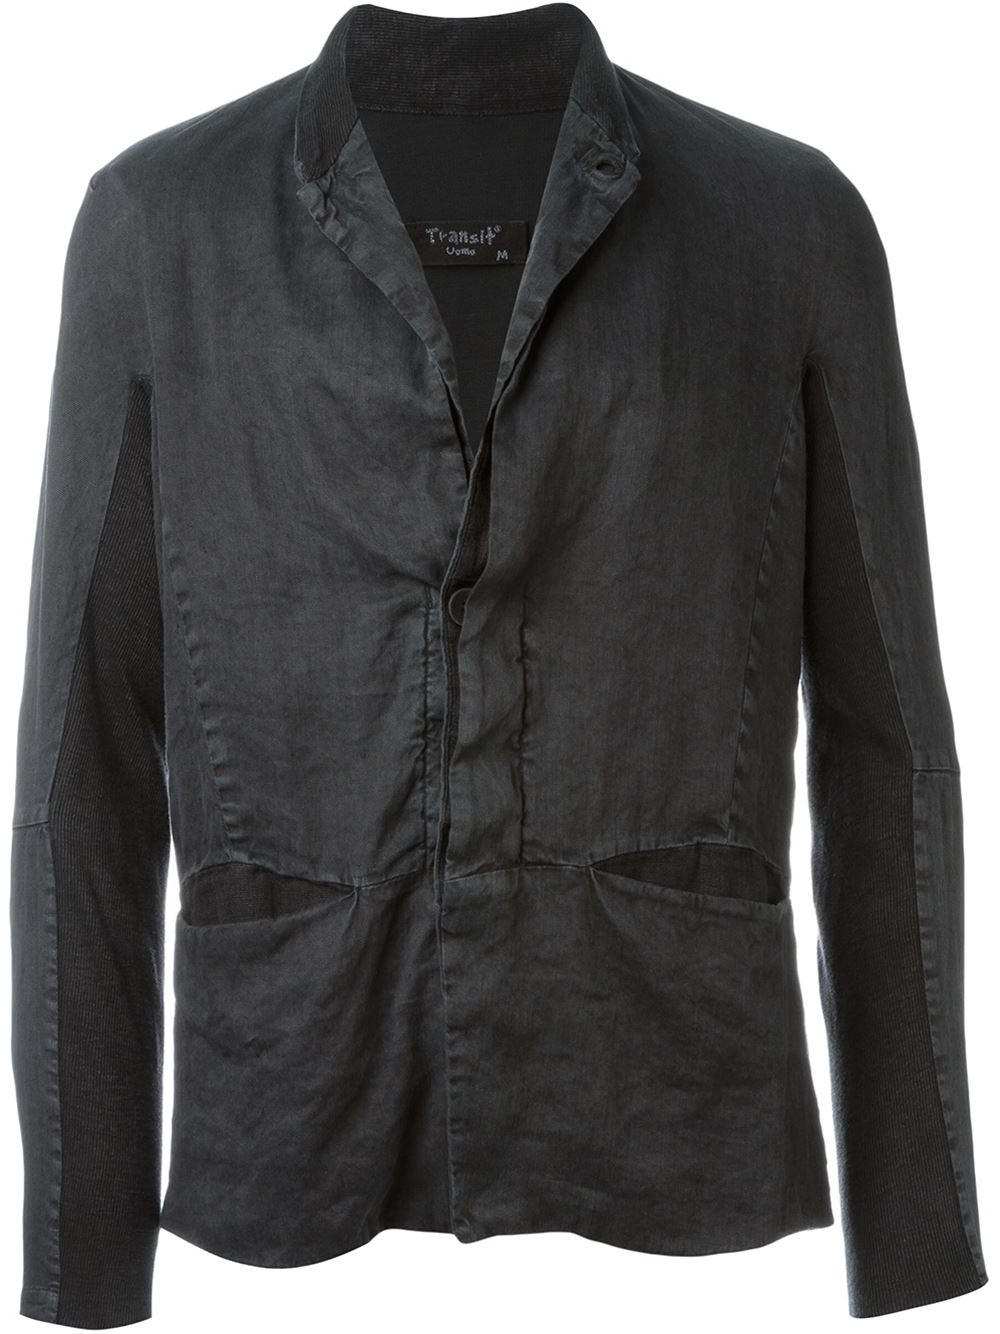 Transit Cotton Concealed Fastening Jacket in Grey (Black) for Men - Lyst